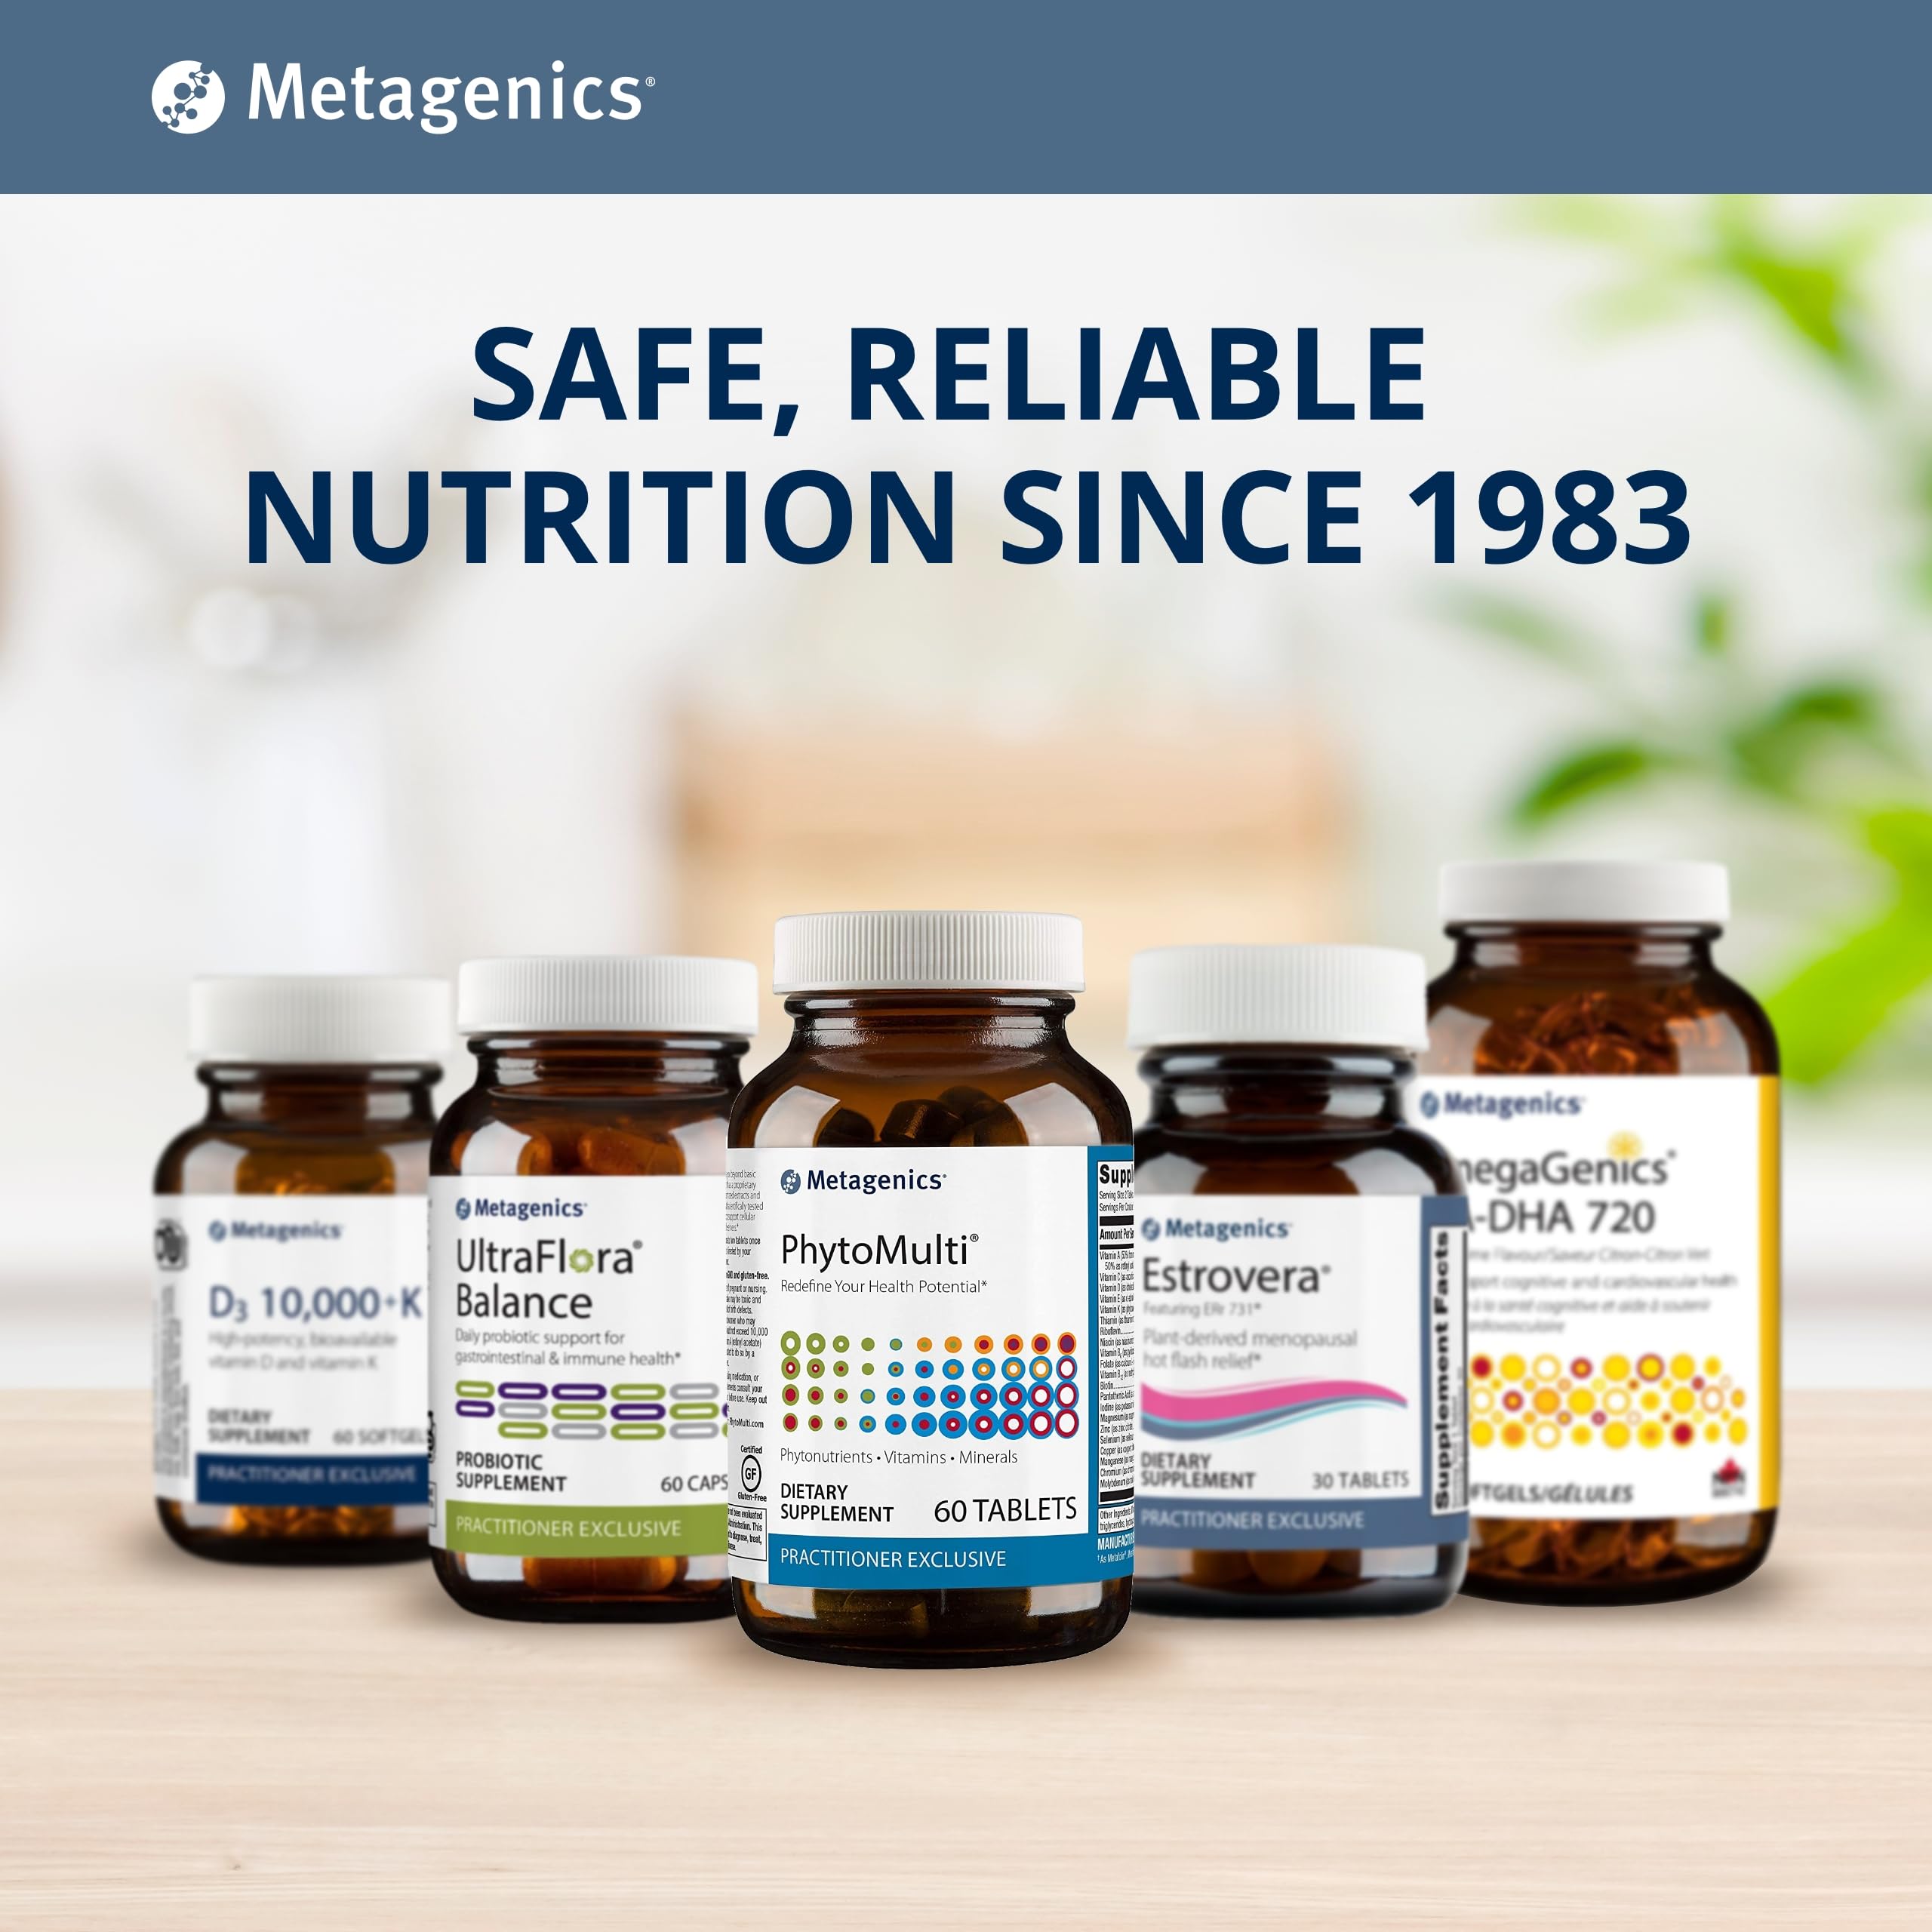 Metagenics OmegaGenics EPA-DHA 720 Fish Oil Health Supplement - 120 Softgels